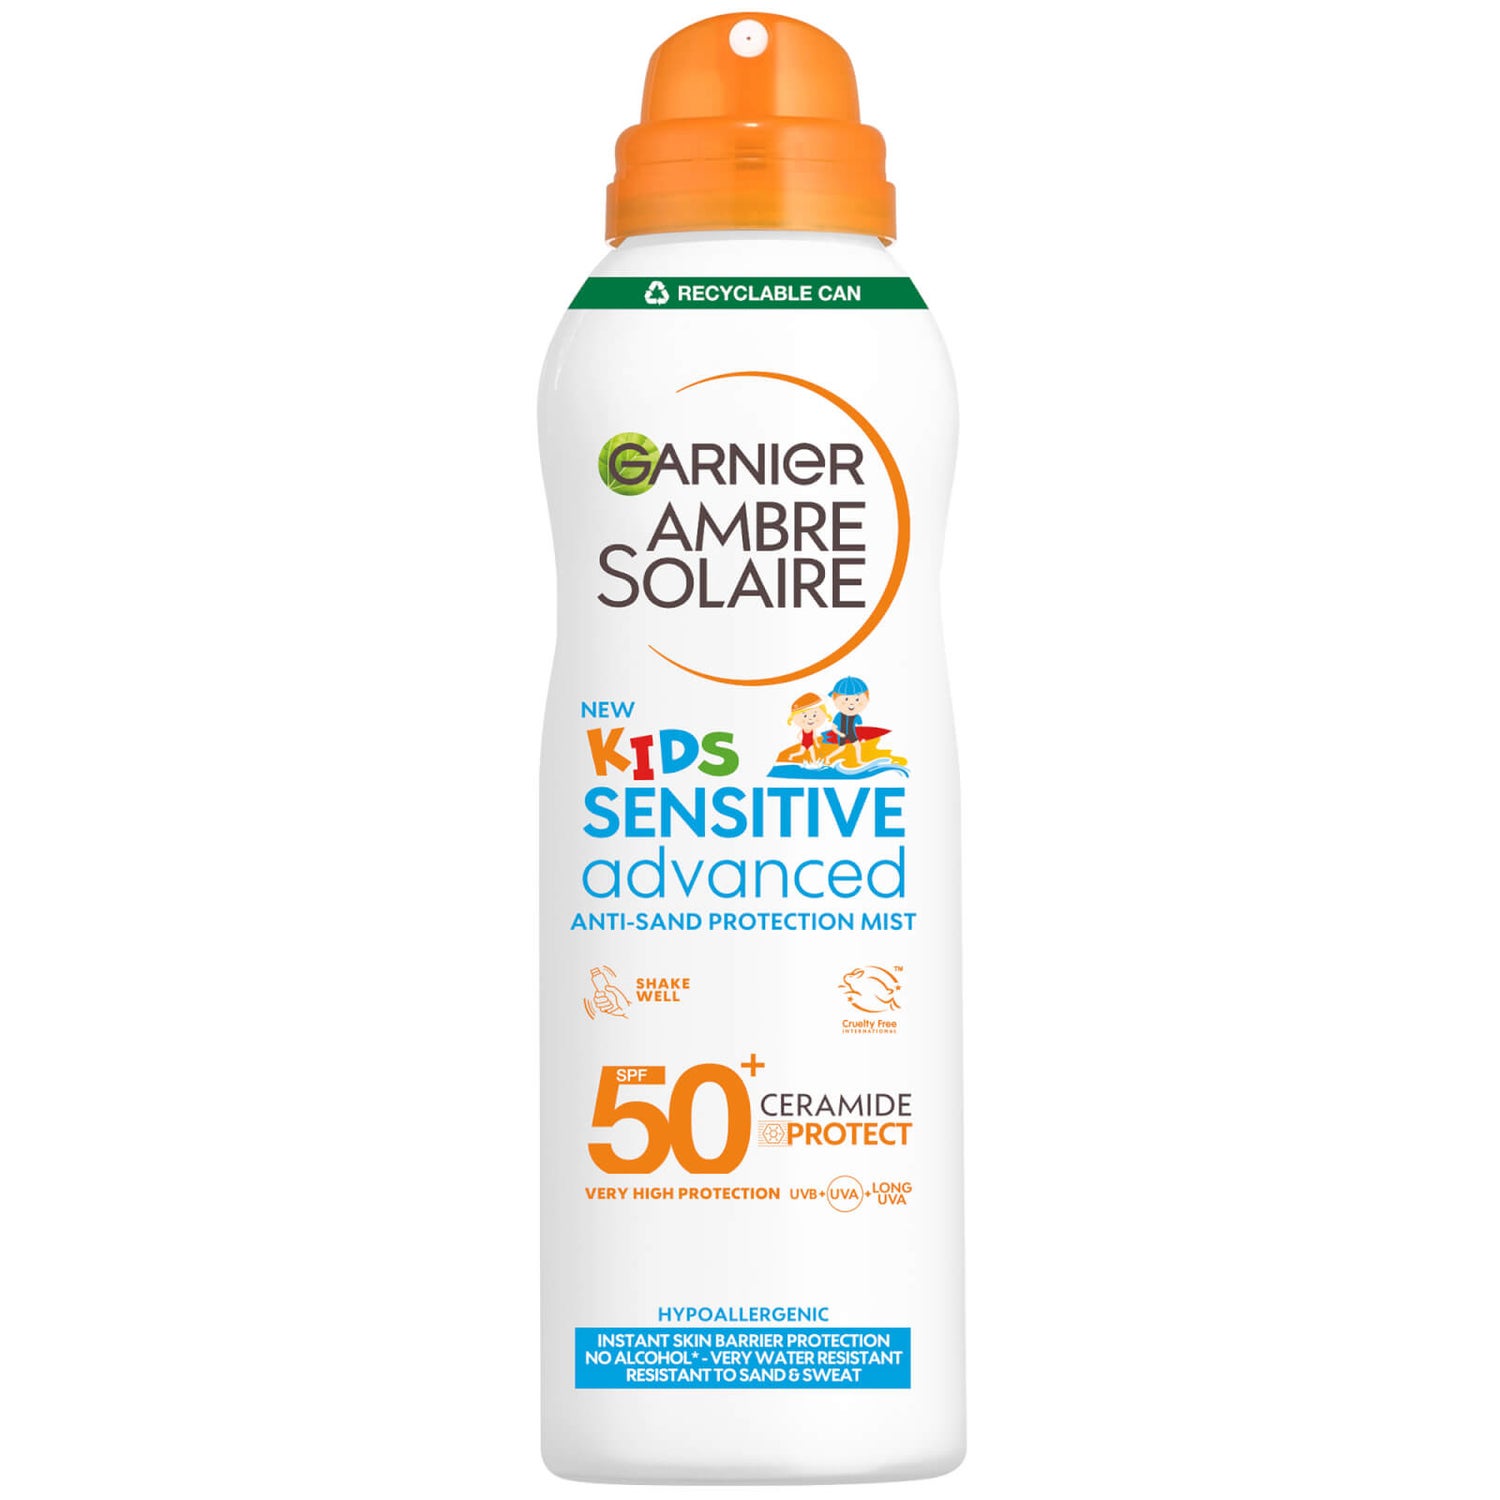 Ambre Solaire Kids\' 50+ weltweit Garnier Advanced Sensitive 150ml SPF Lieferservice - Anti-Sand Gratis Mist